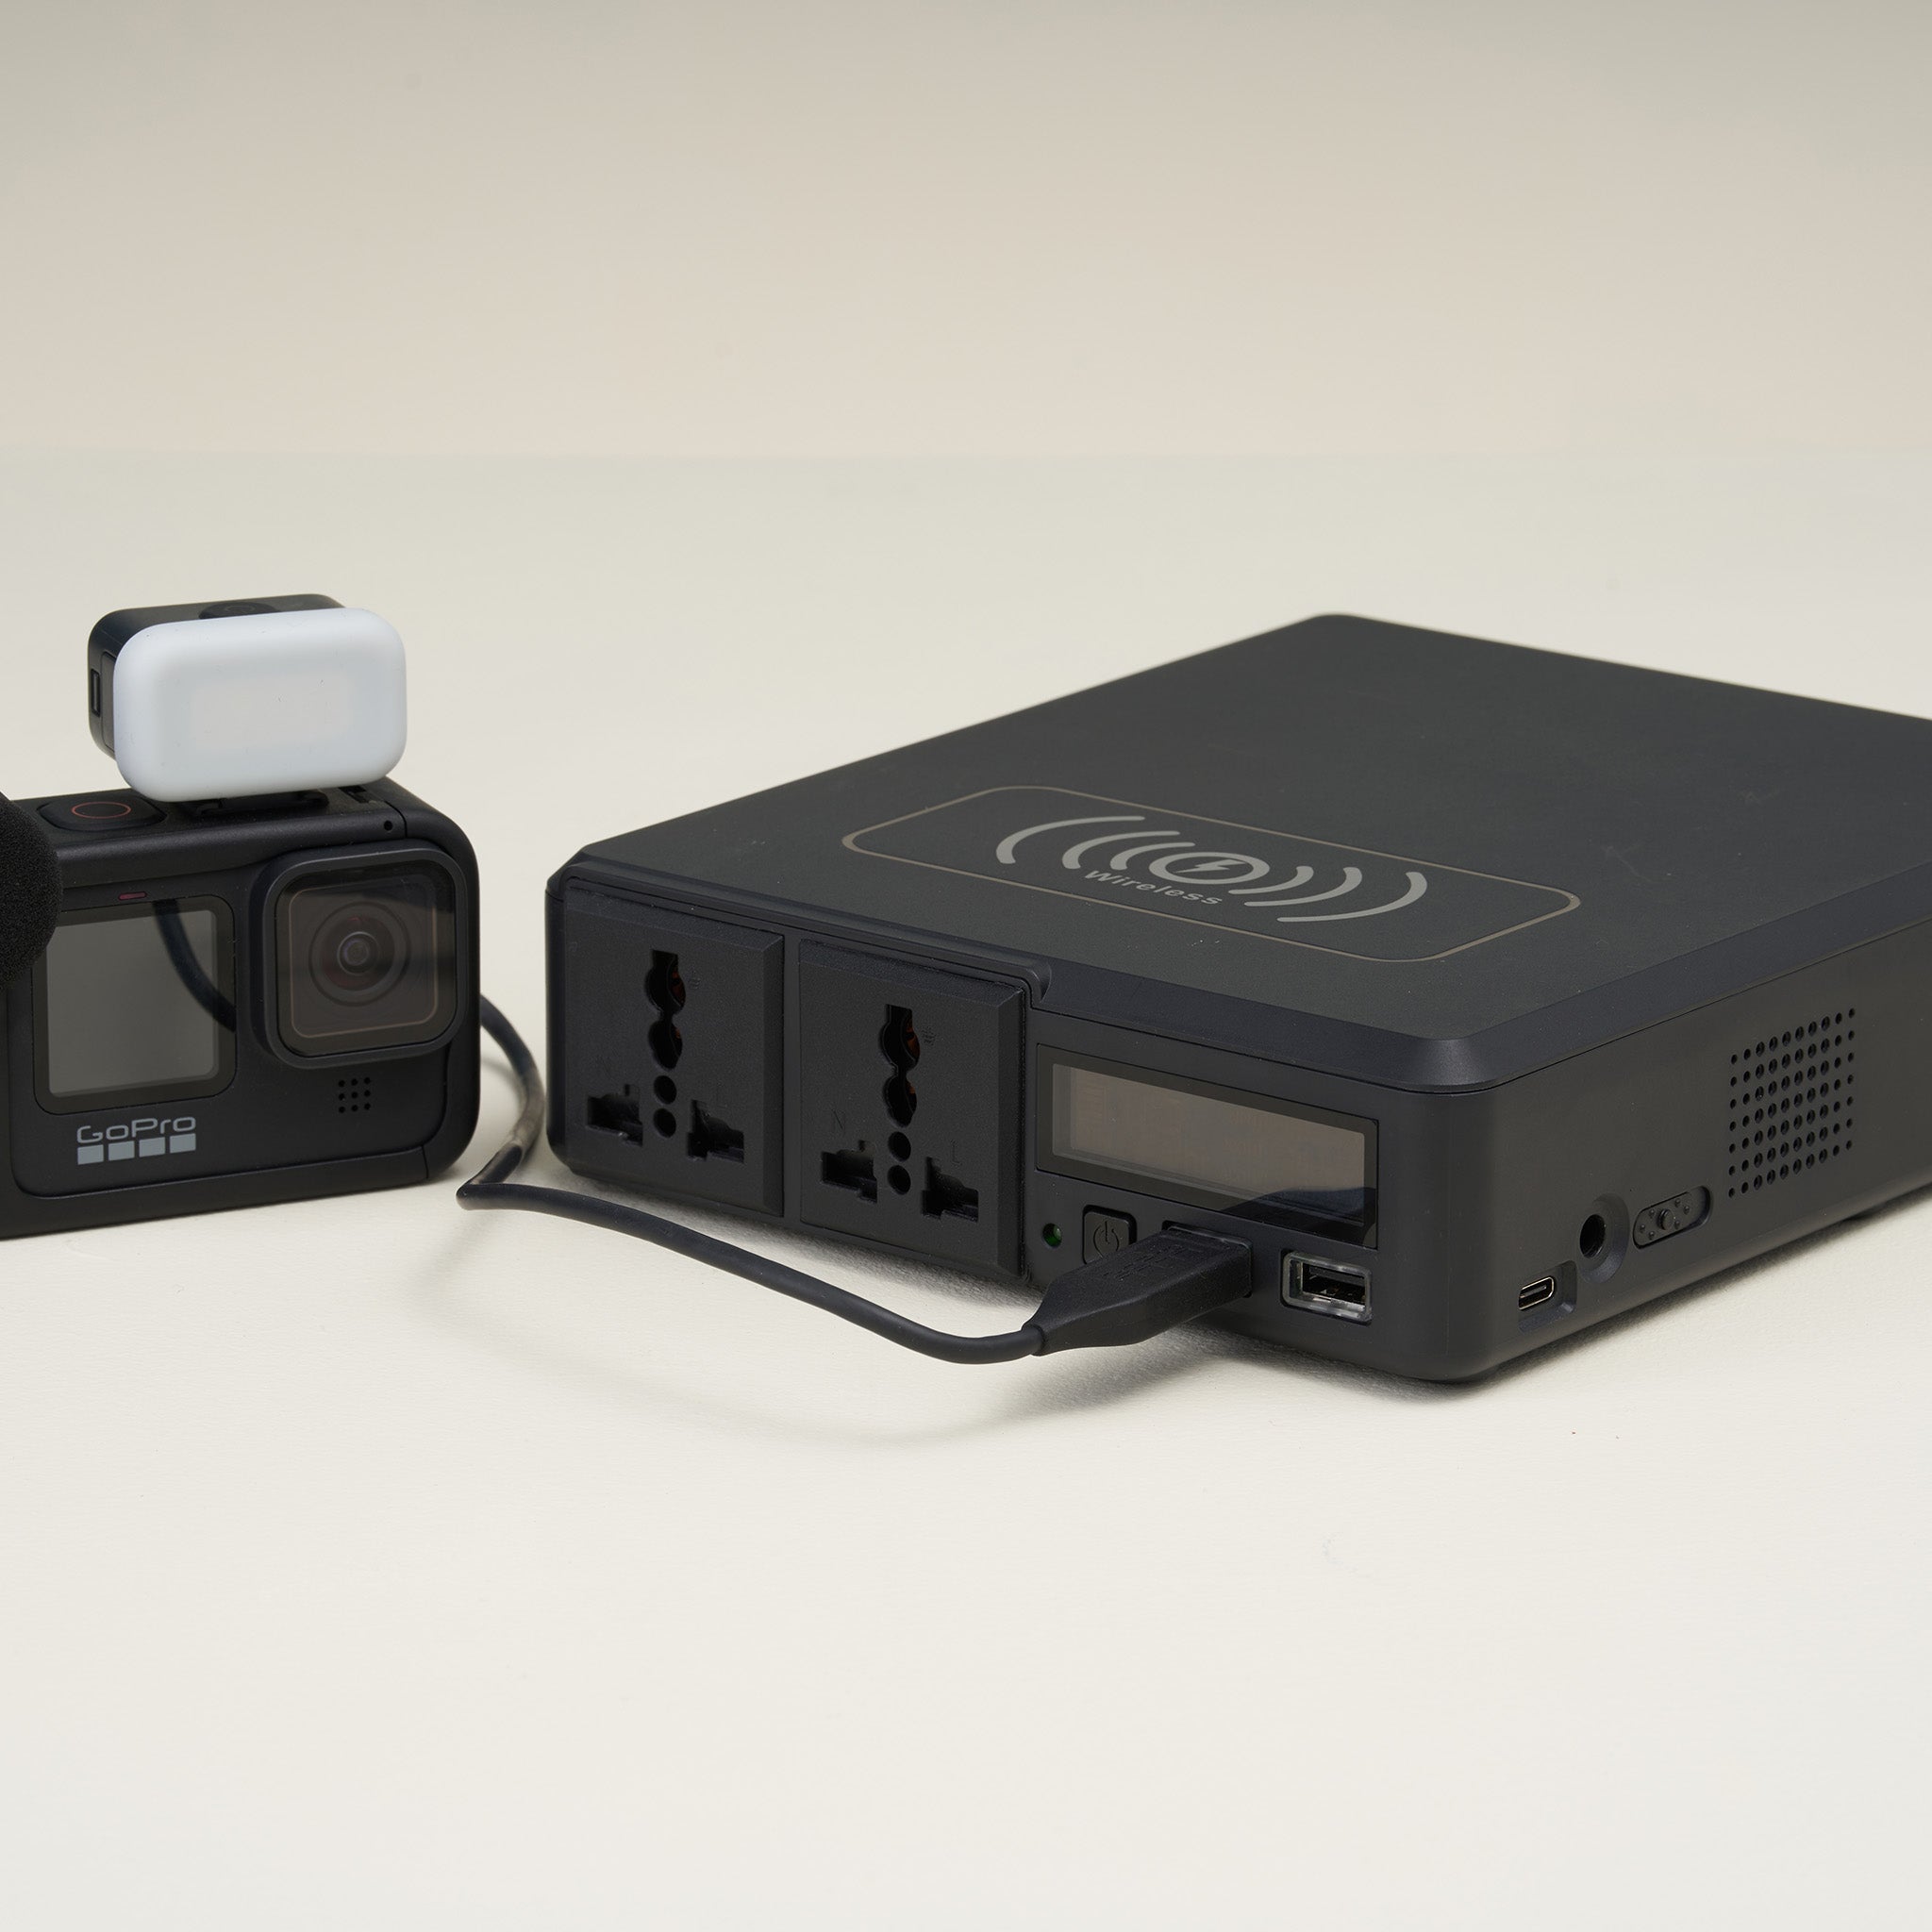 Homie - Portable AC/DC/USB/Wireless Power Supply with Digital Display